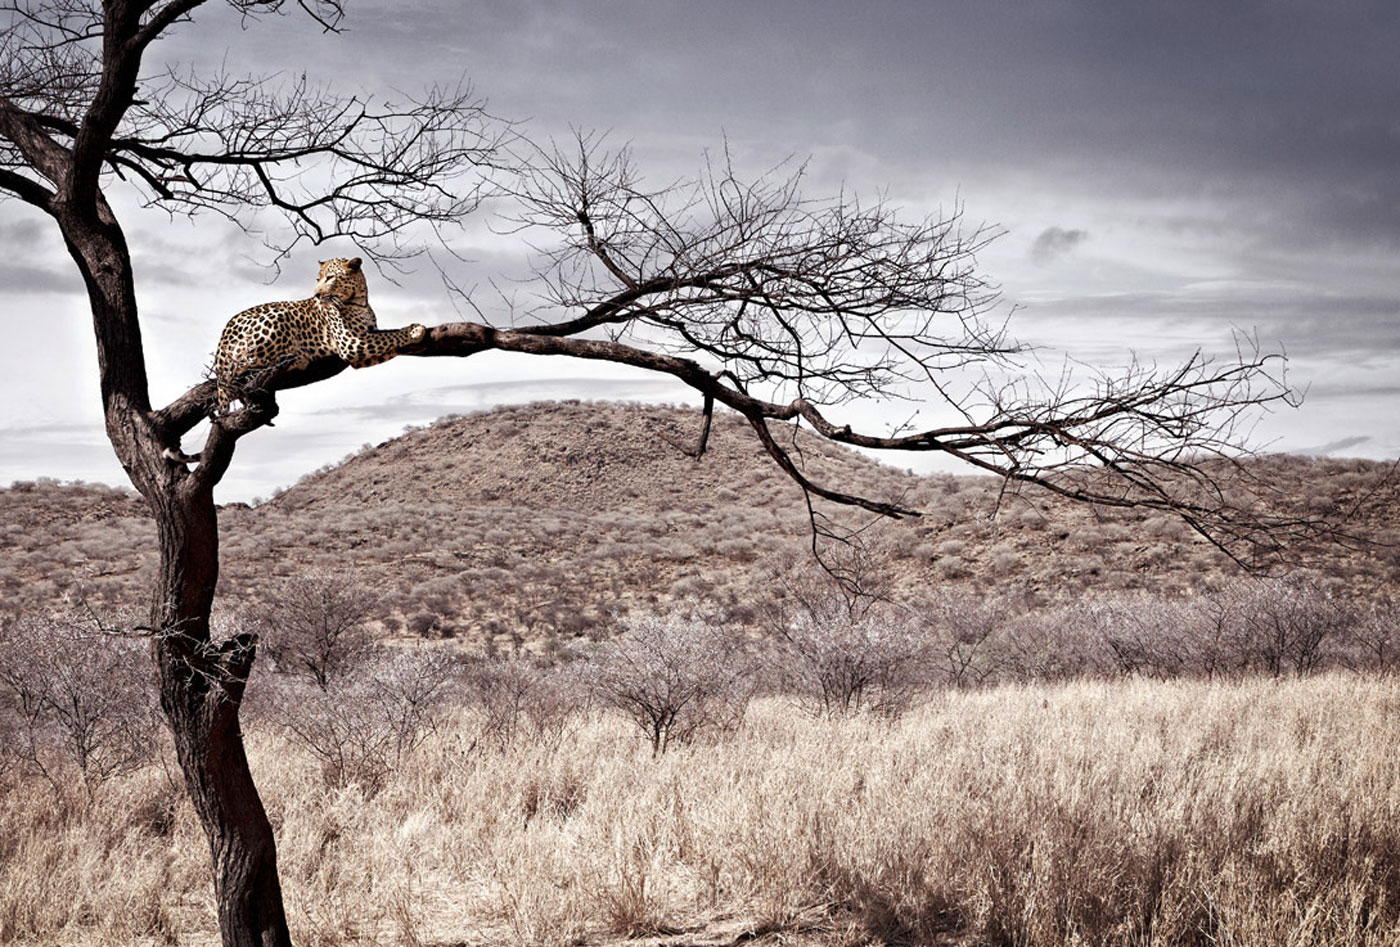 Wildlife Photography Africa